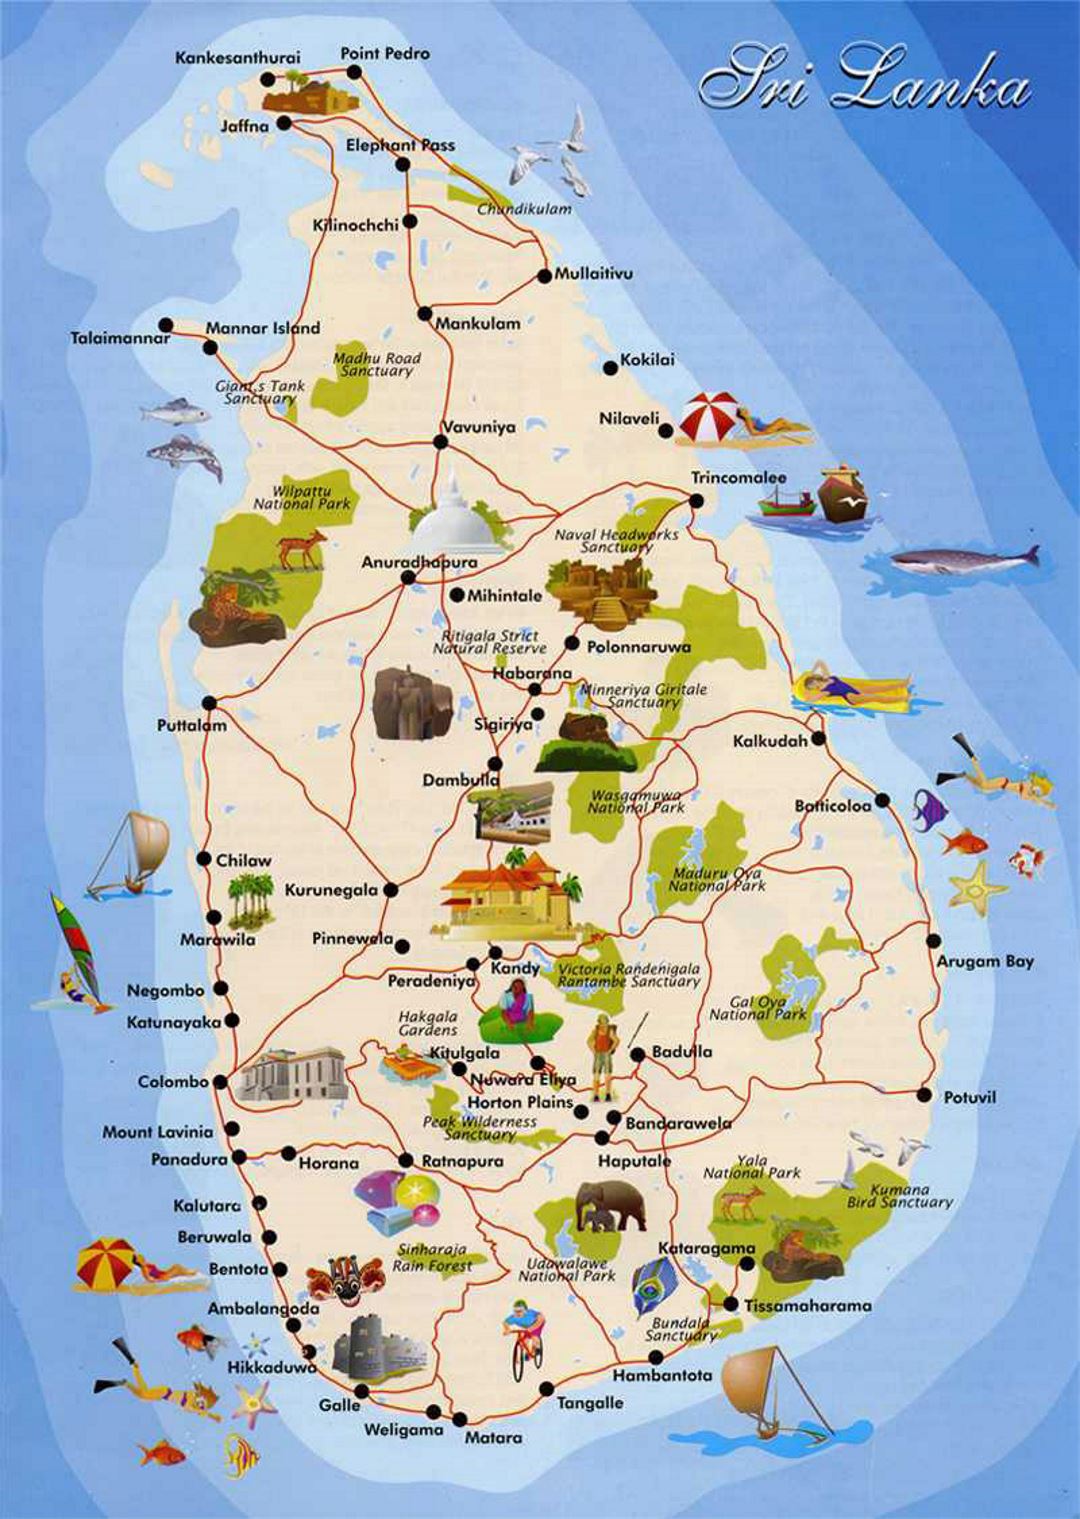 Detailed tourist map of Sri Lanka